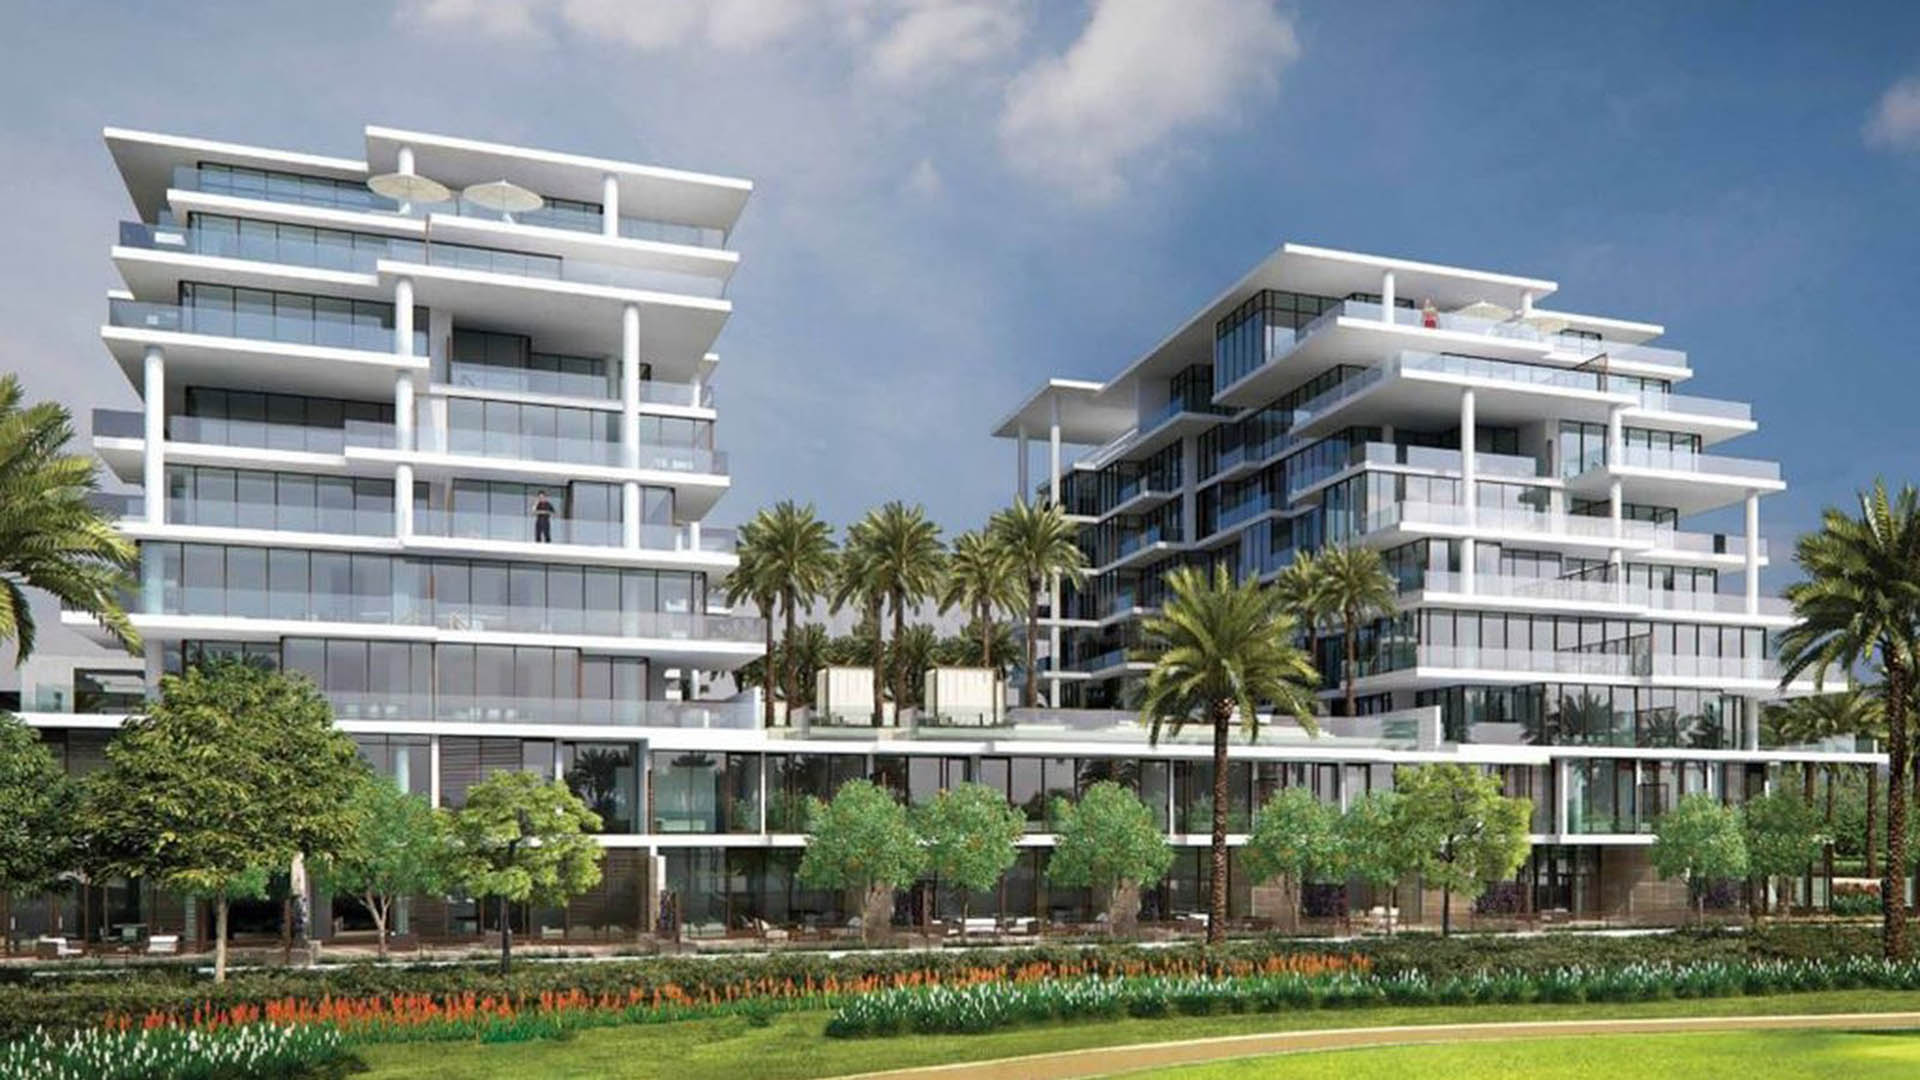 ALL SEASONS by Damac Properties in DAMAC Hills, Dubai - 6